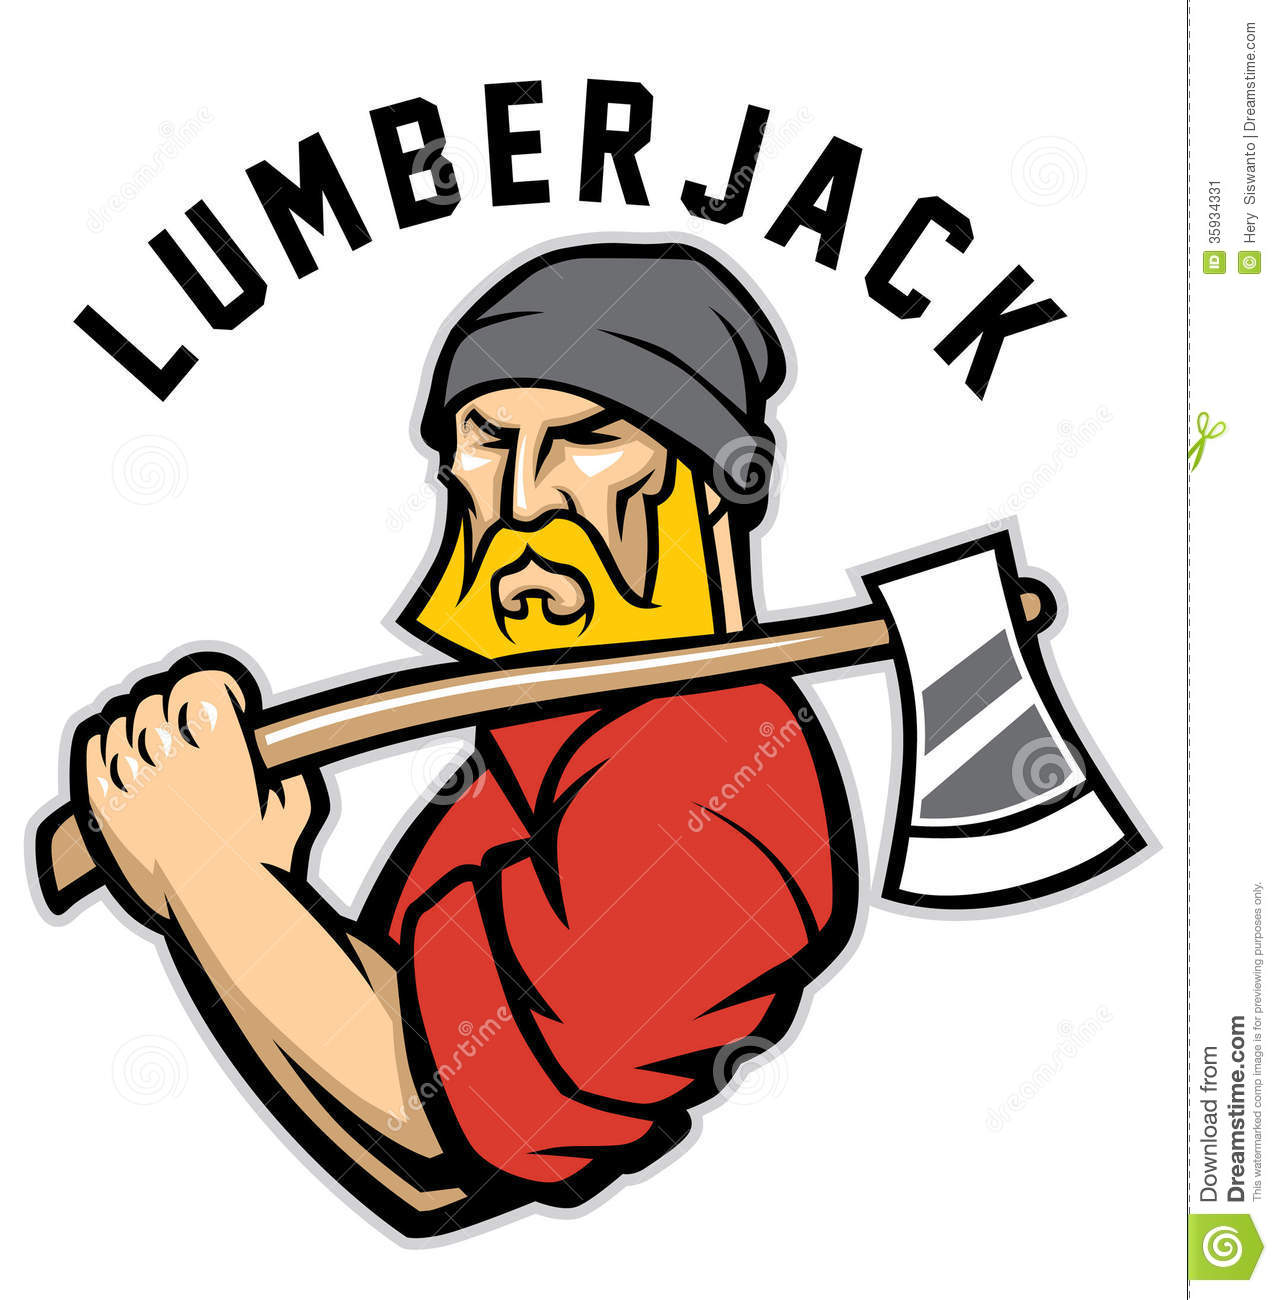 Lumberjack clipart - Clipground